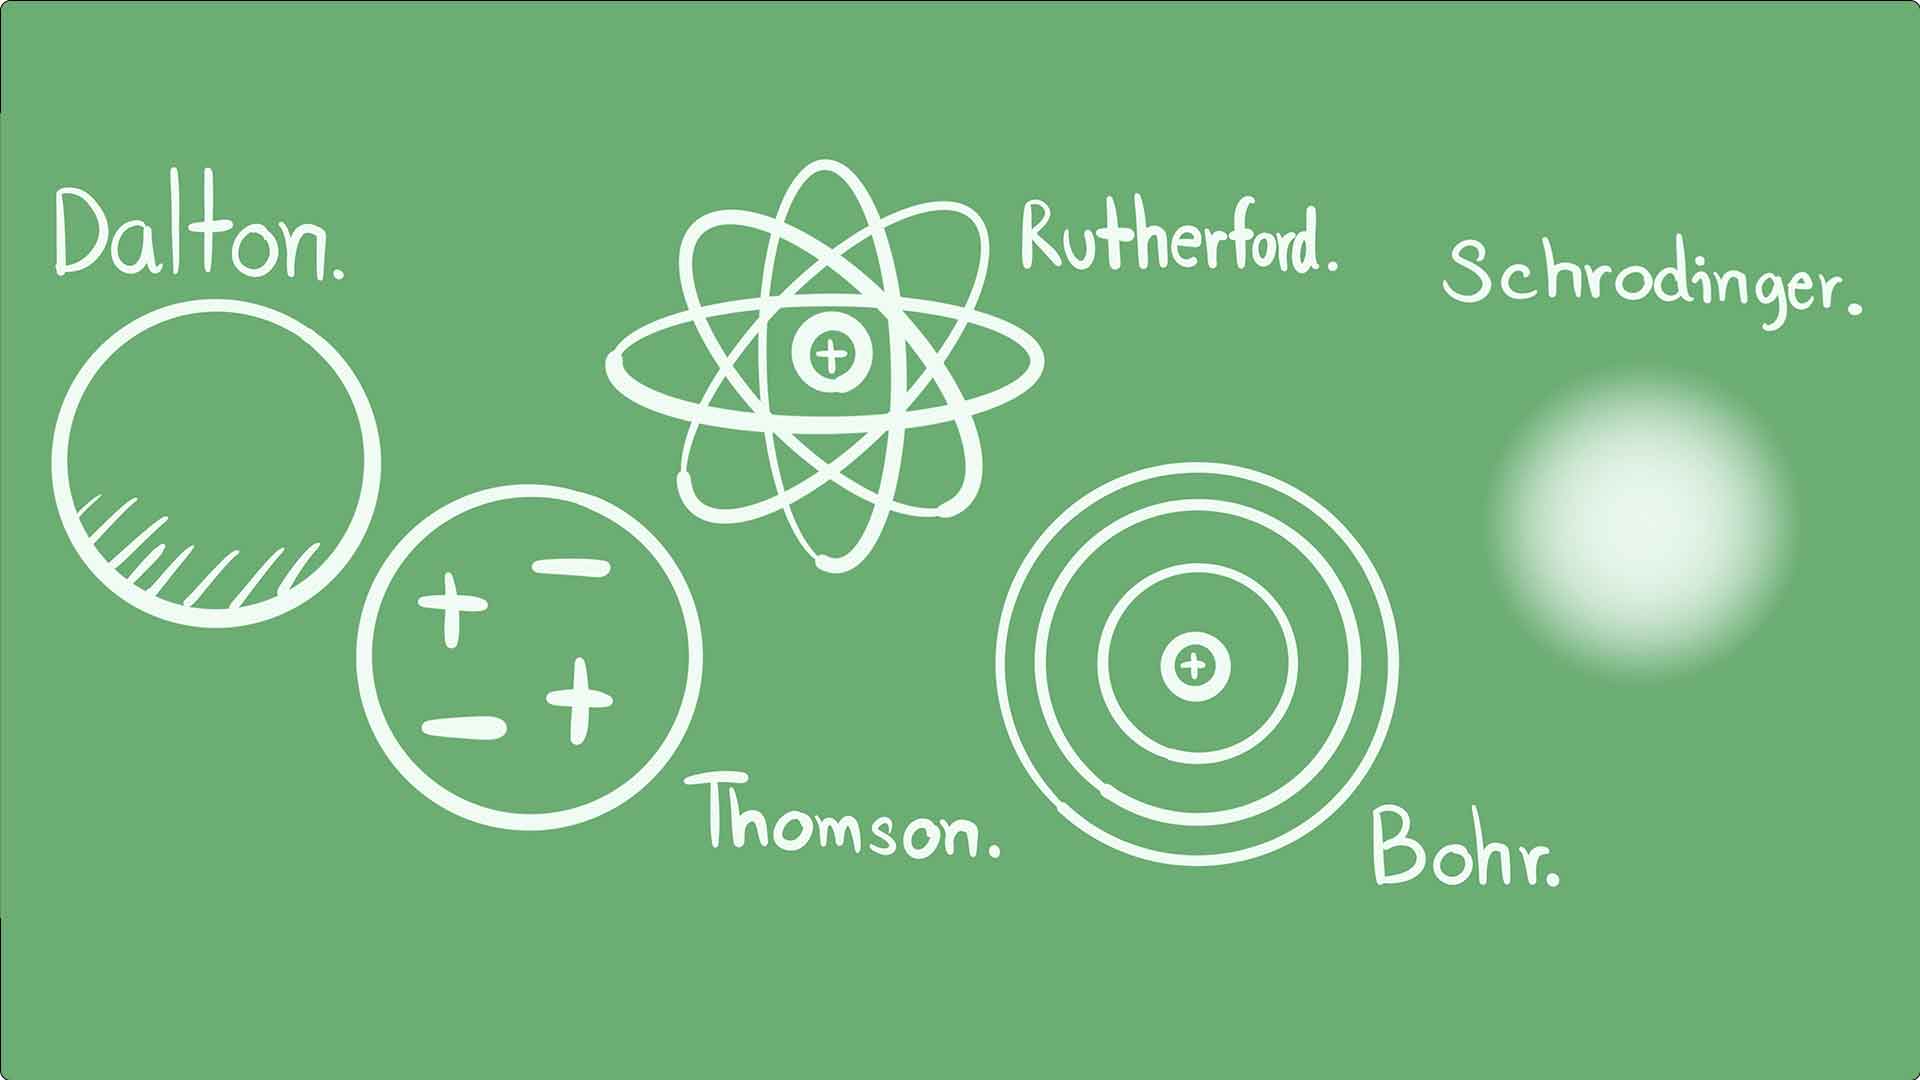 bohrs atomic model labeled